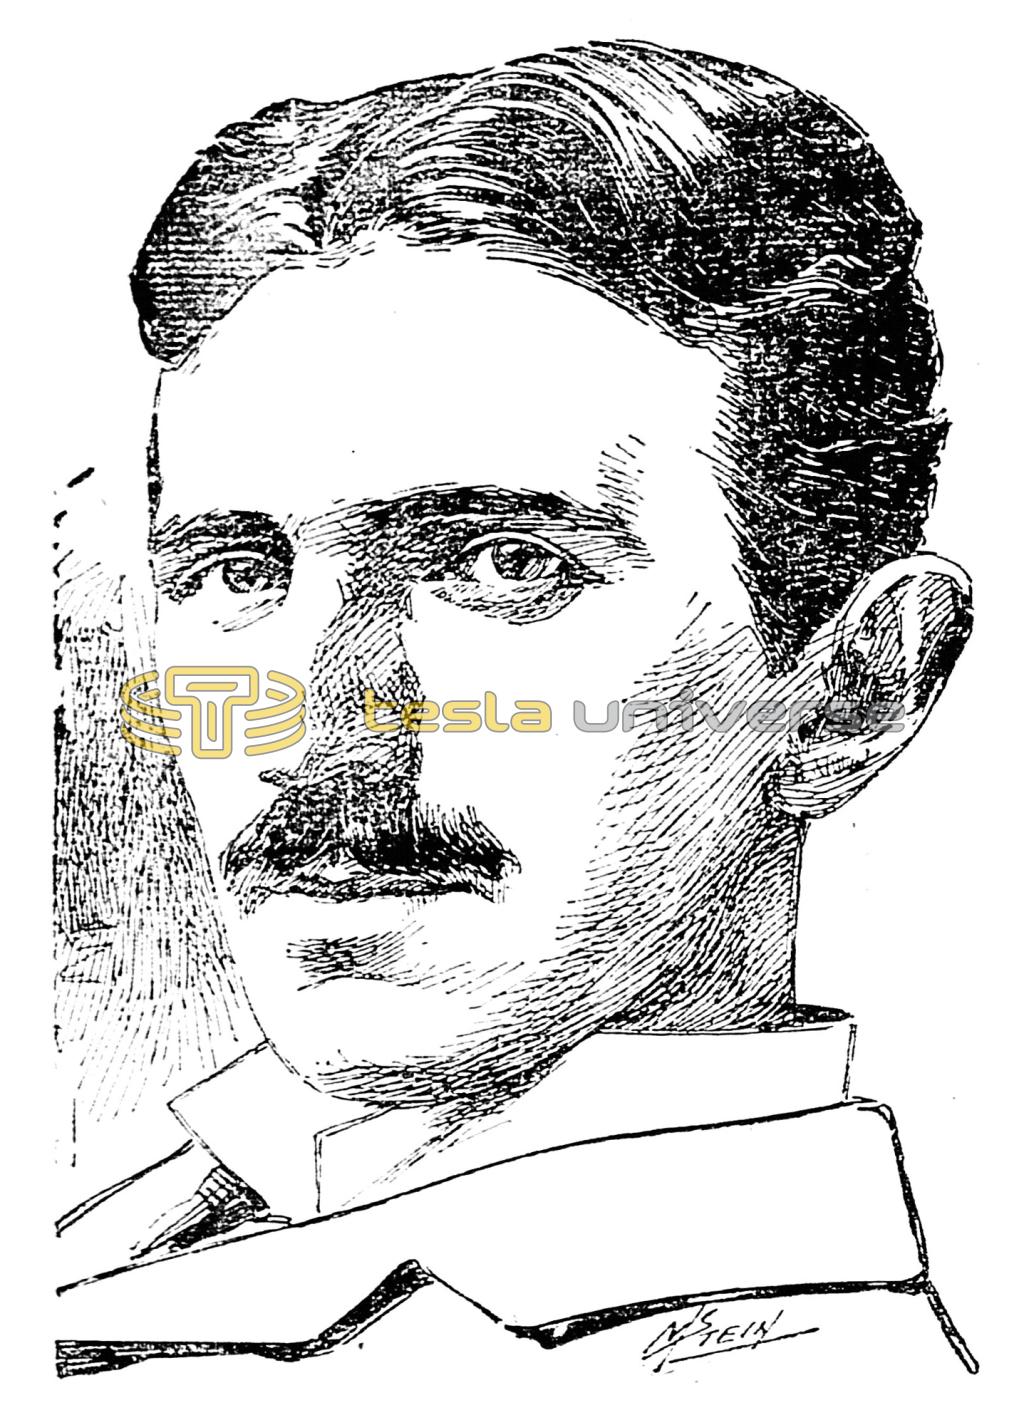 Sketch of the electrical genius, Nikola Tesla